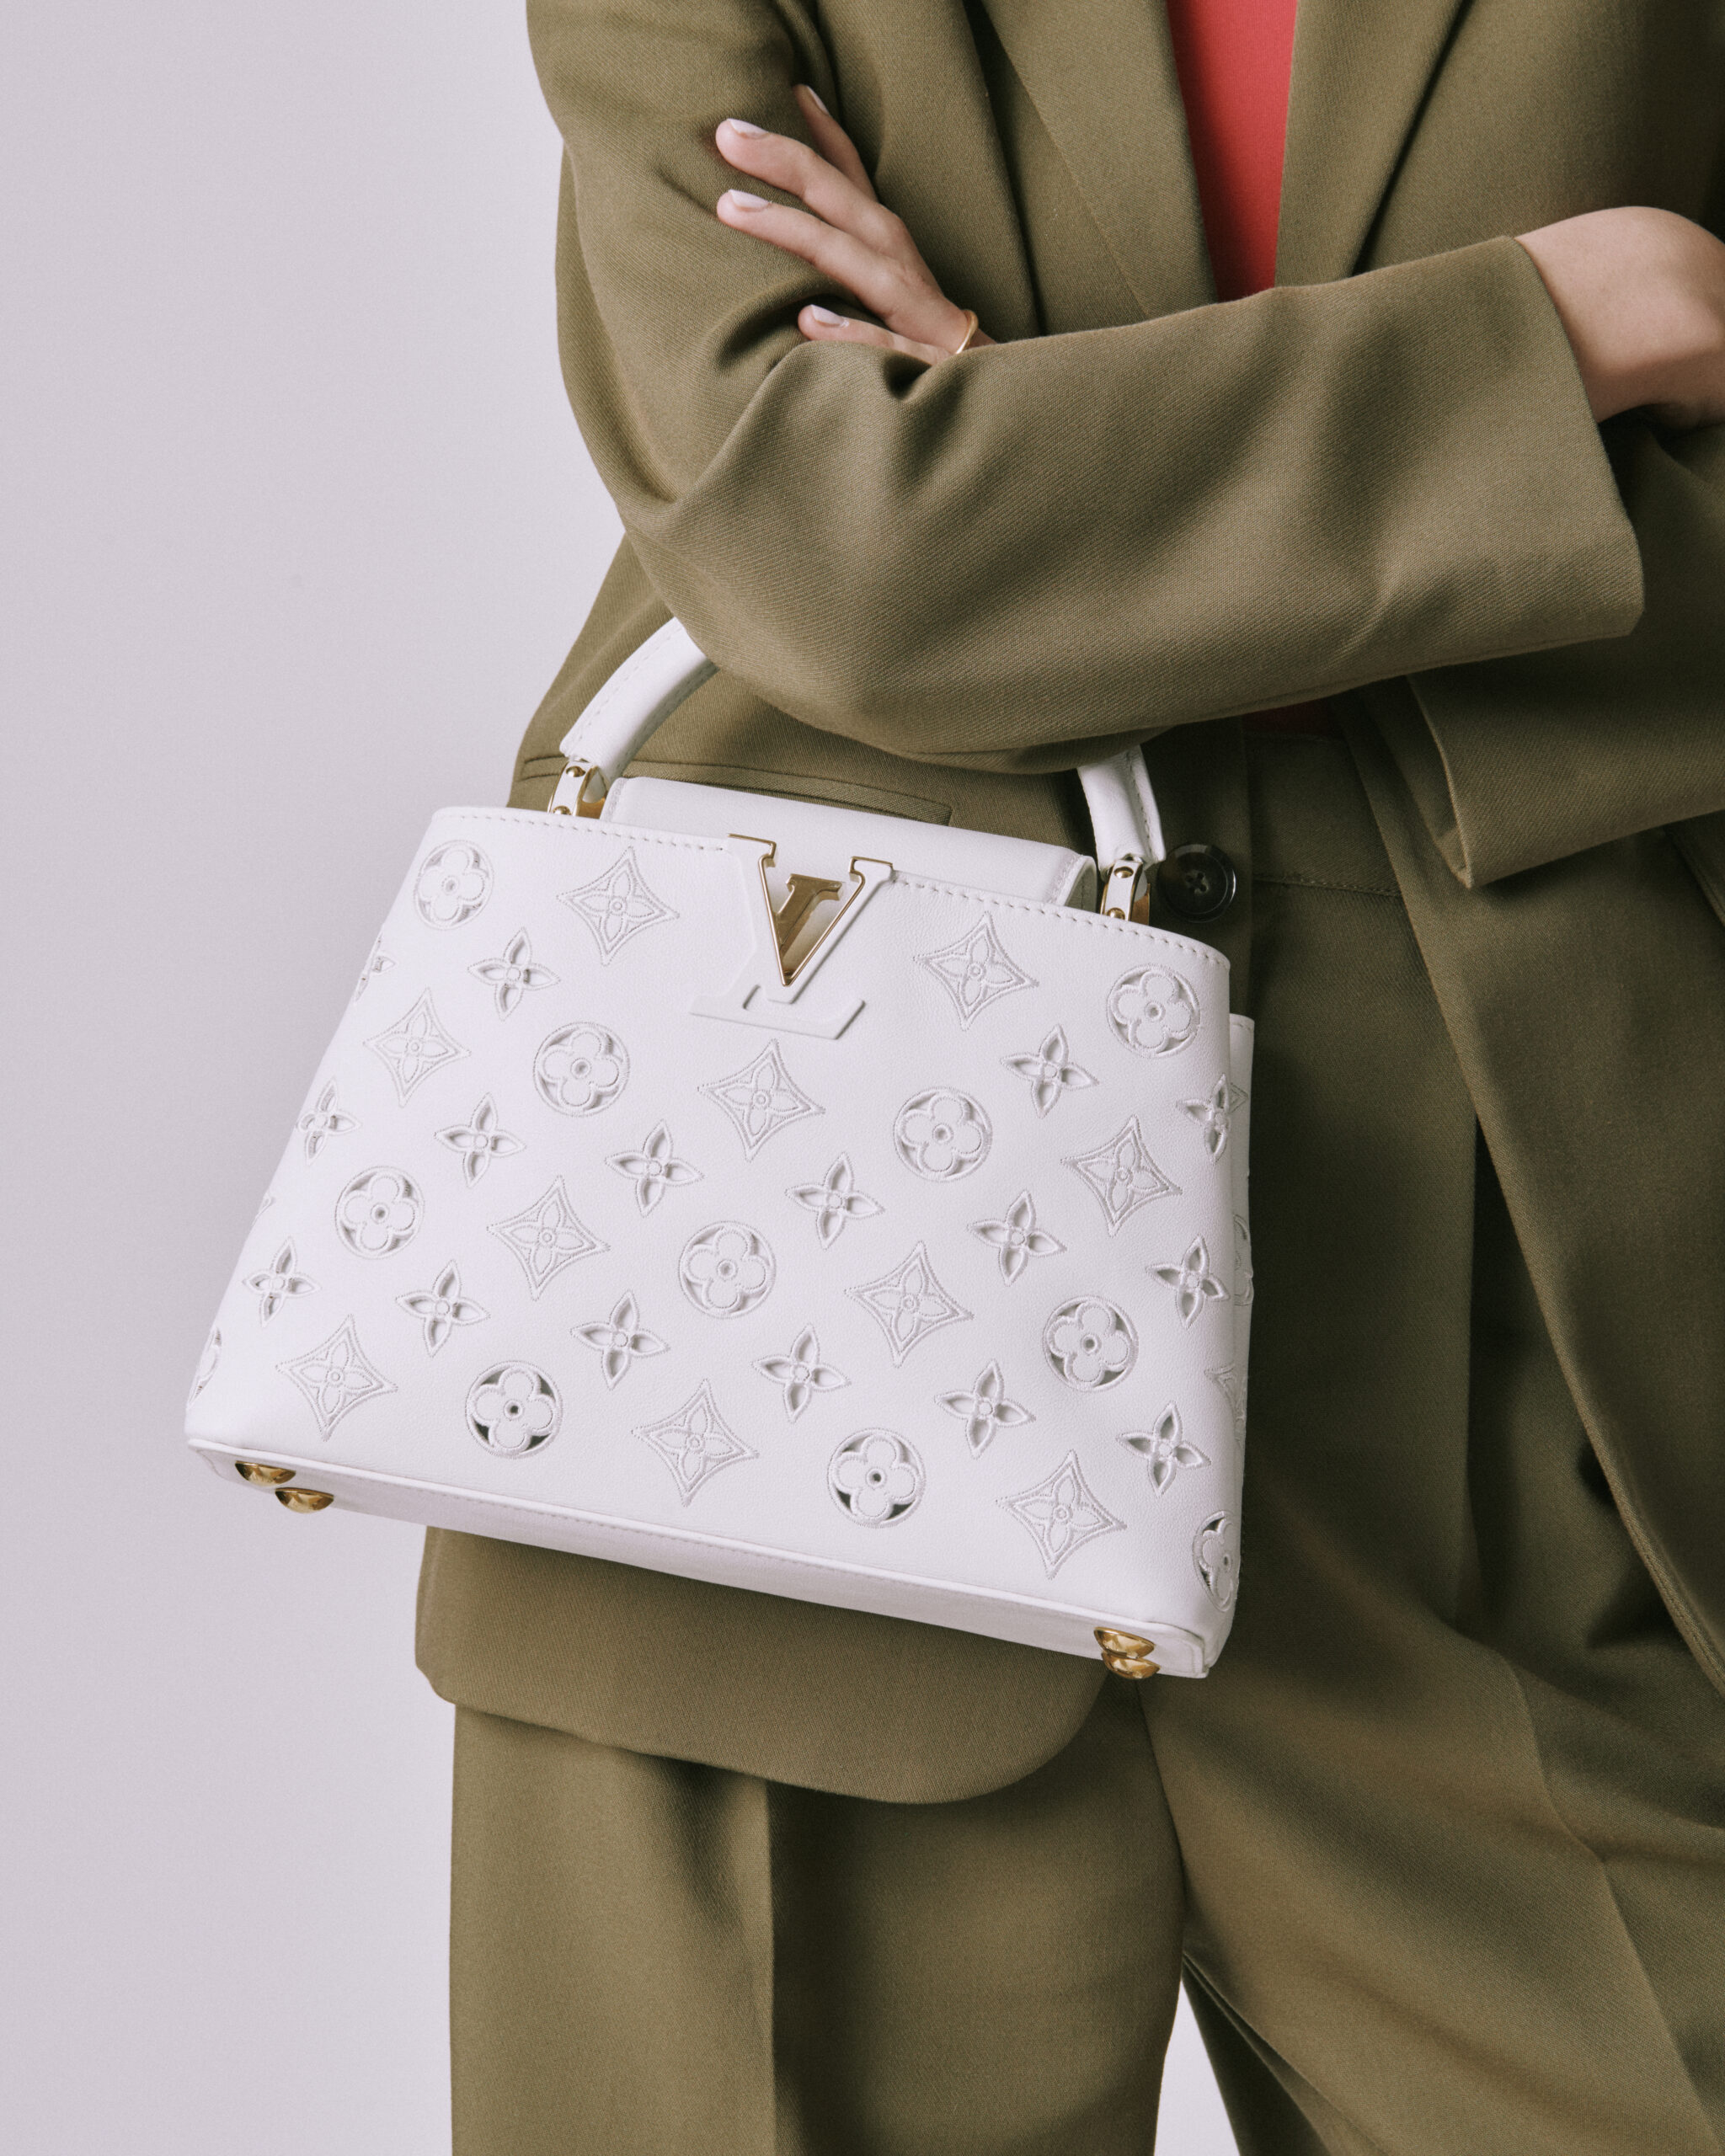 Uncover The Top Louis Vuitton Handbag Styles - The Vault